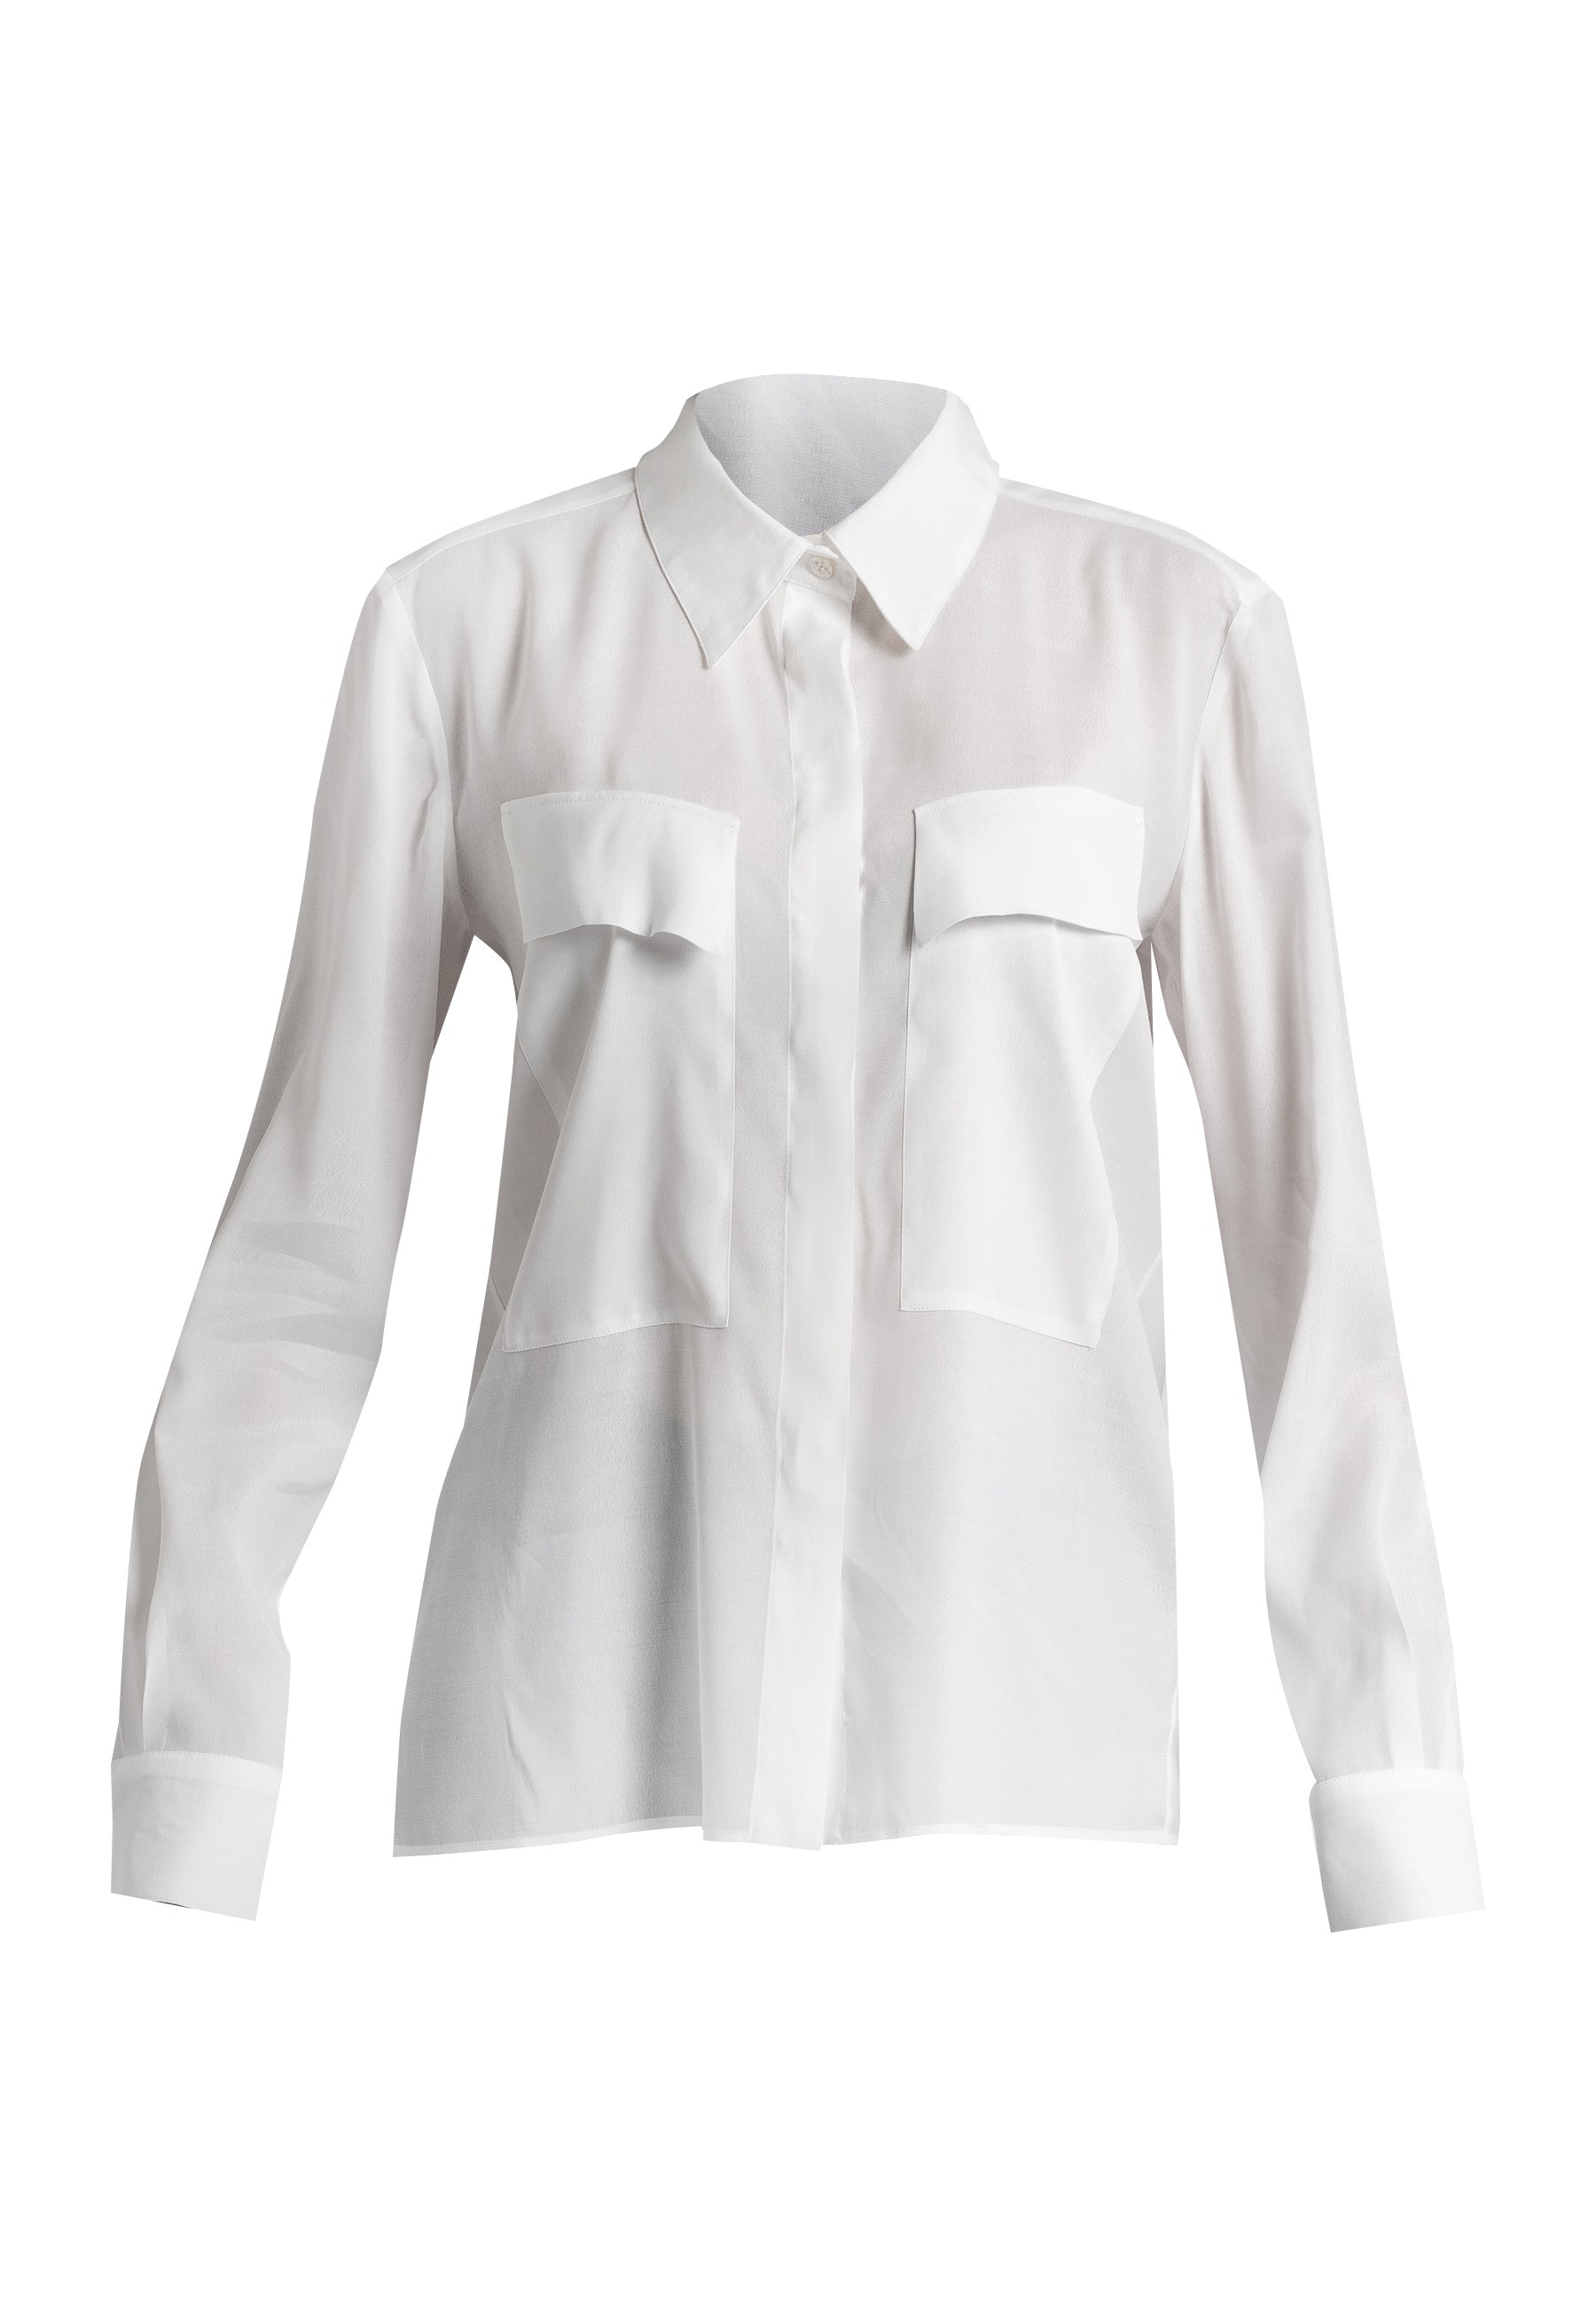  feminine white shirt, ladies long sleeve shirt, viscose blouse, stylish white shirt, pocket shirt